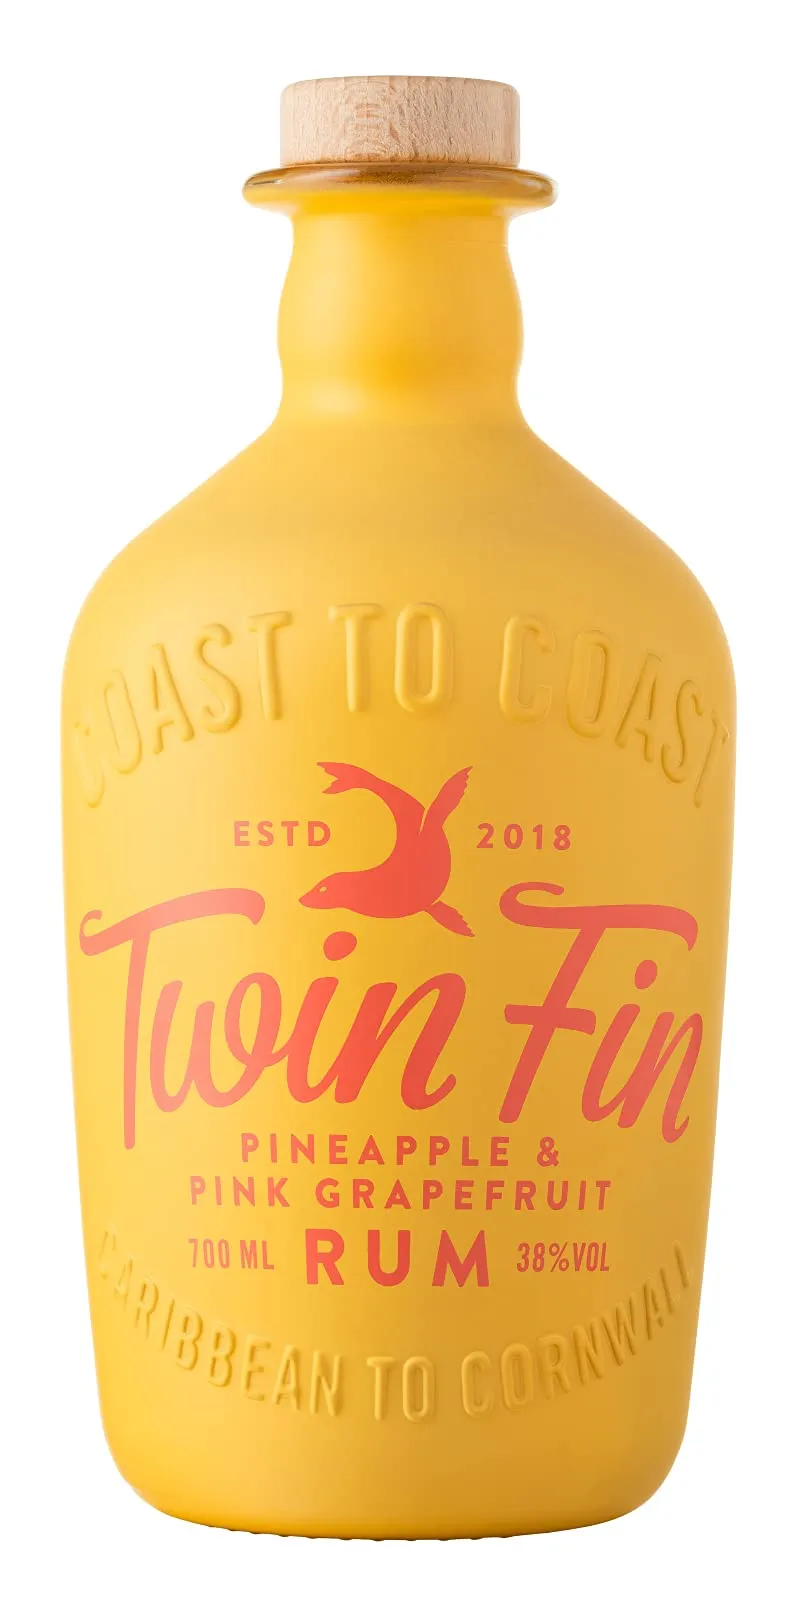 Twin Fin Pineapple & Pink Grapefruit Rum